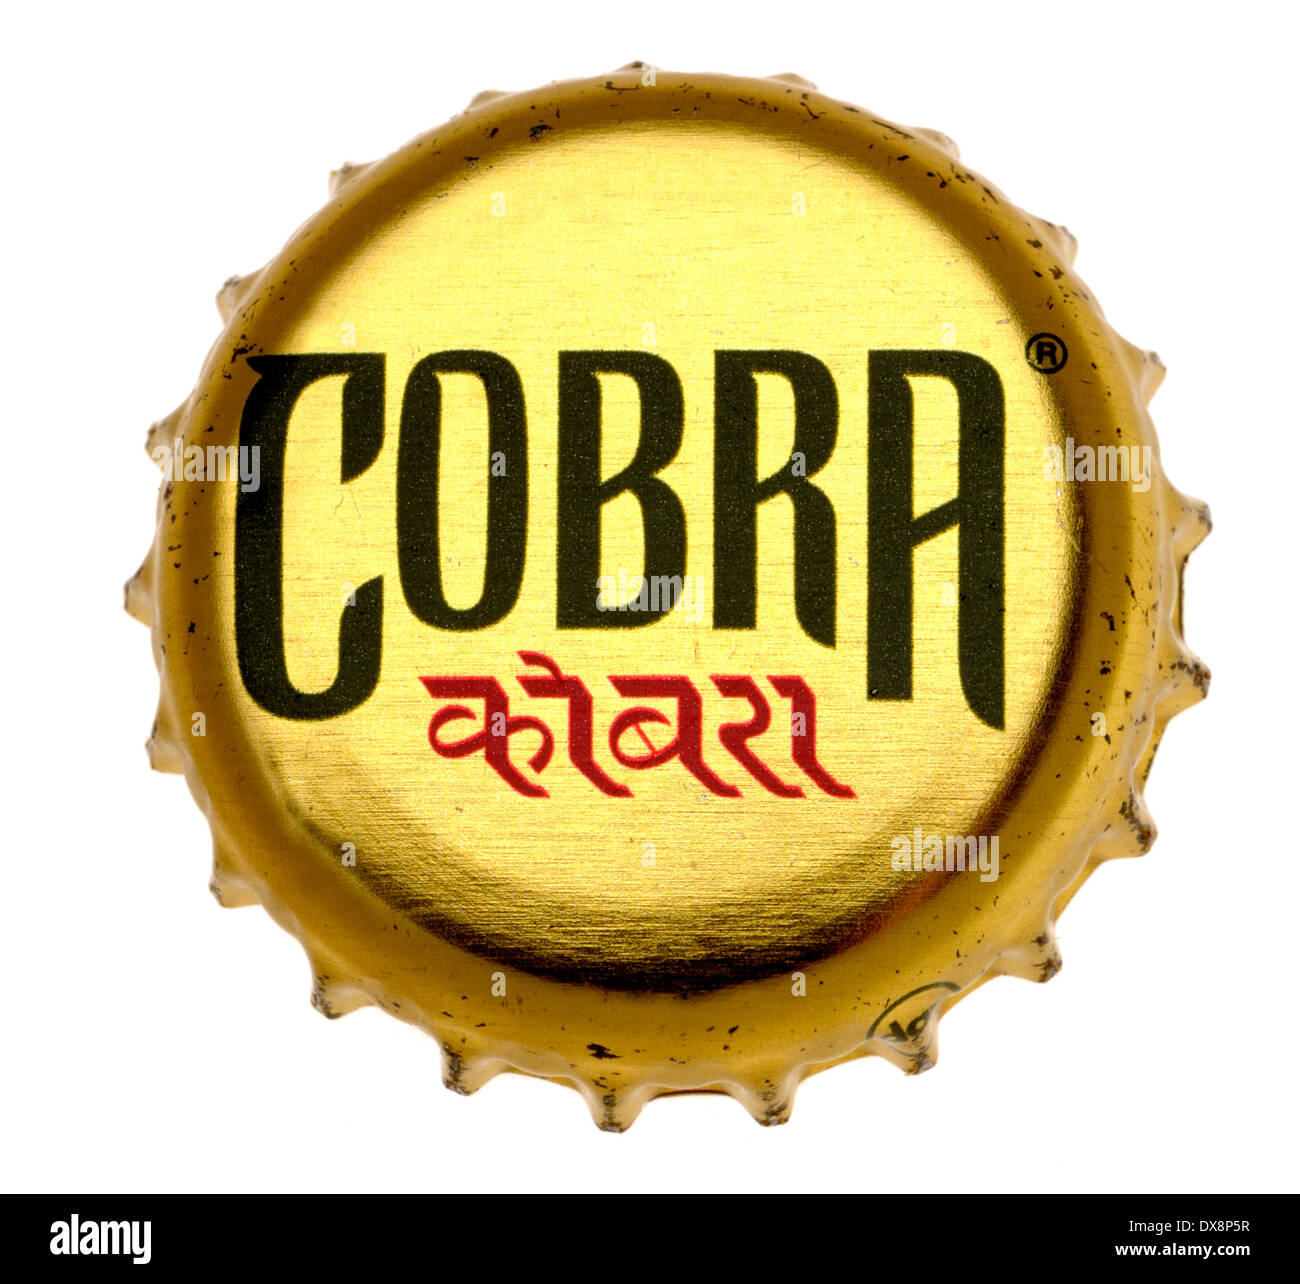 Beer bottle cap - Cobra (India) Stock Photo